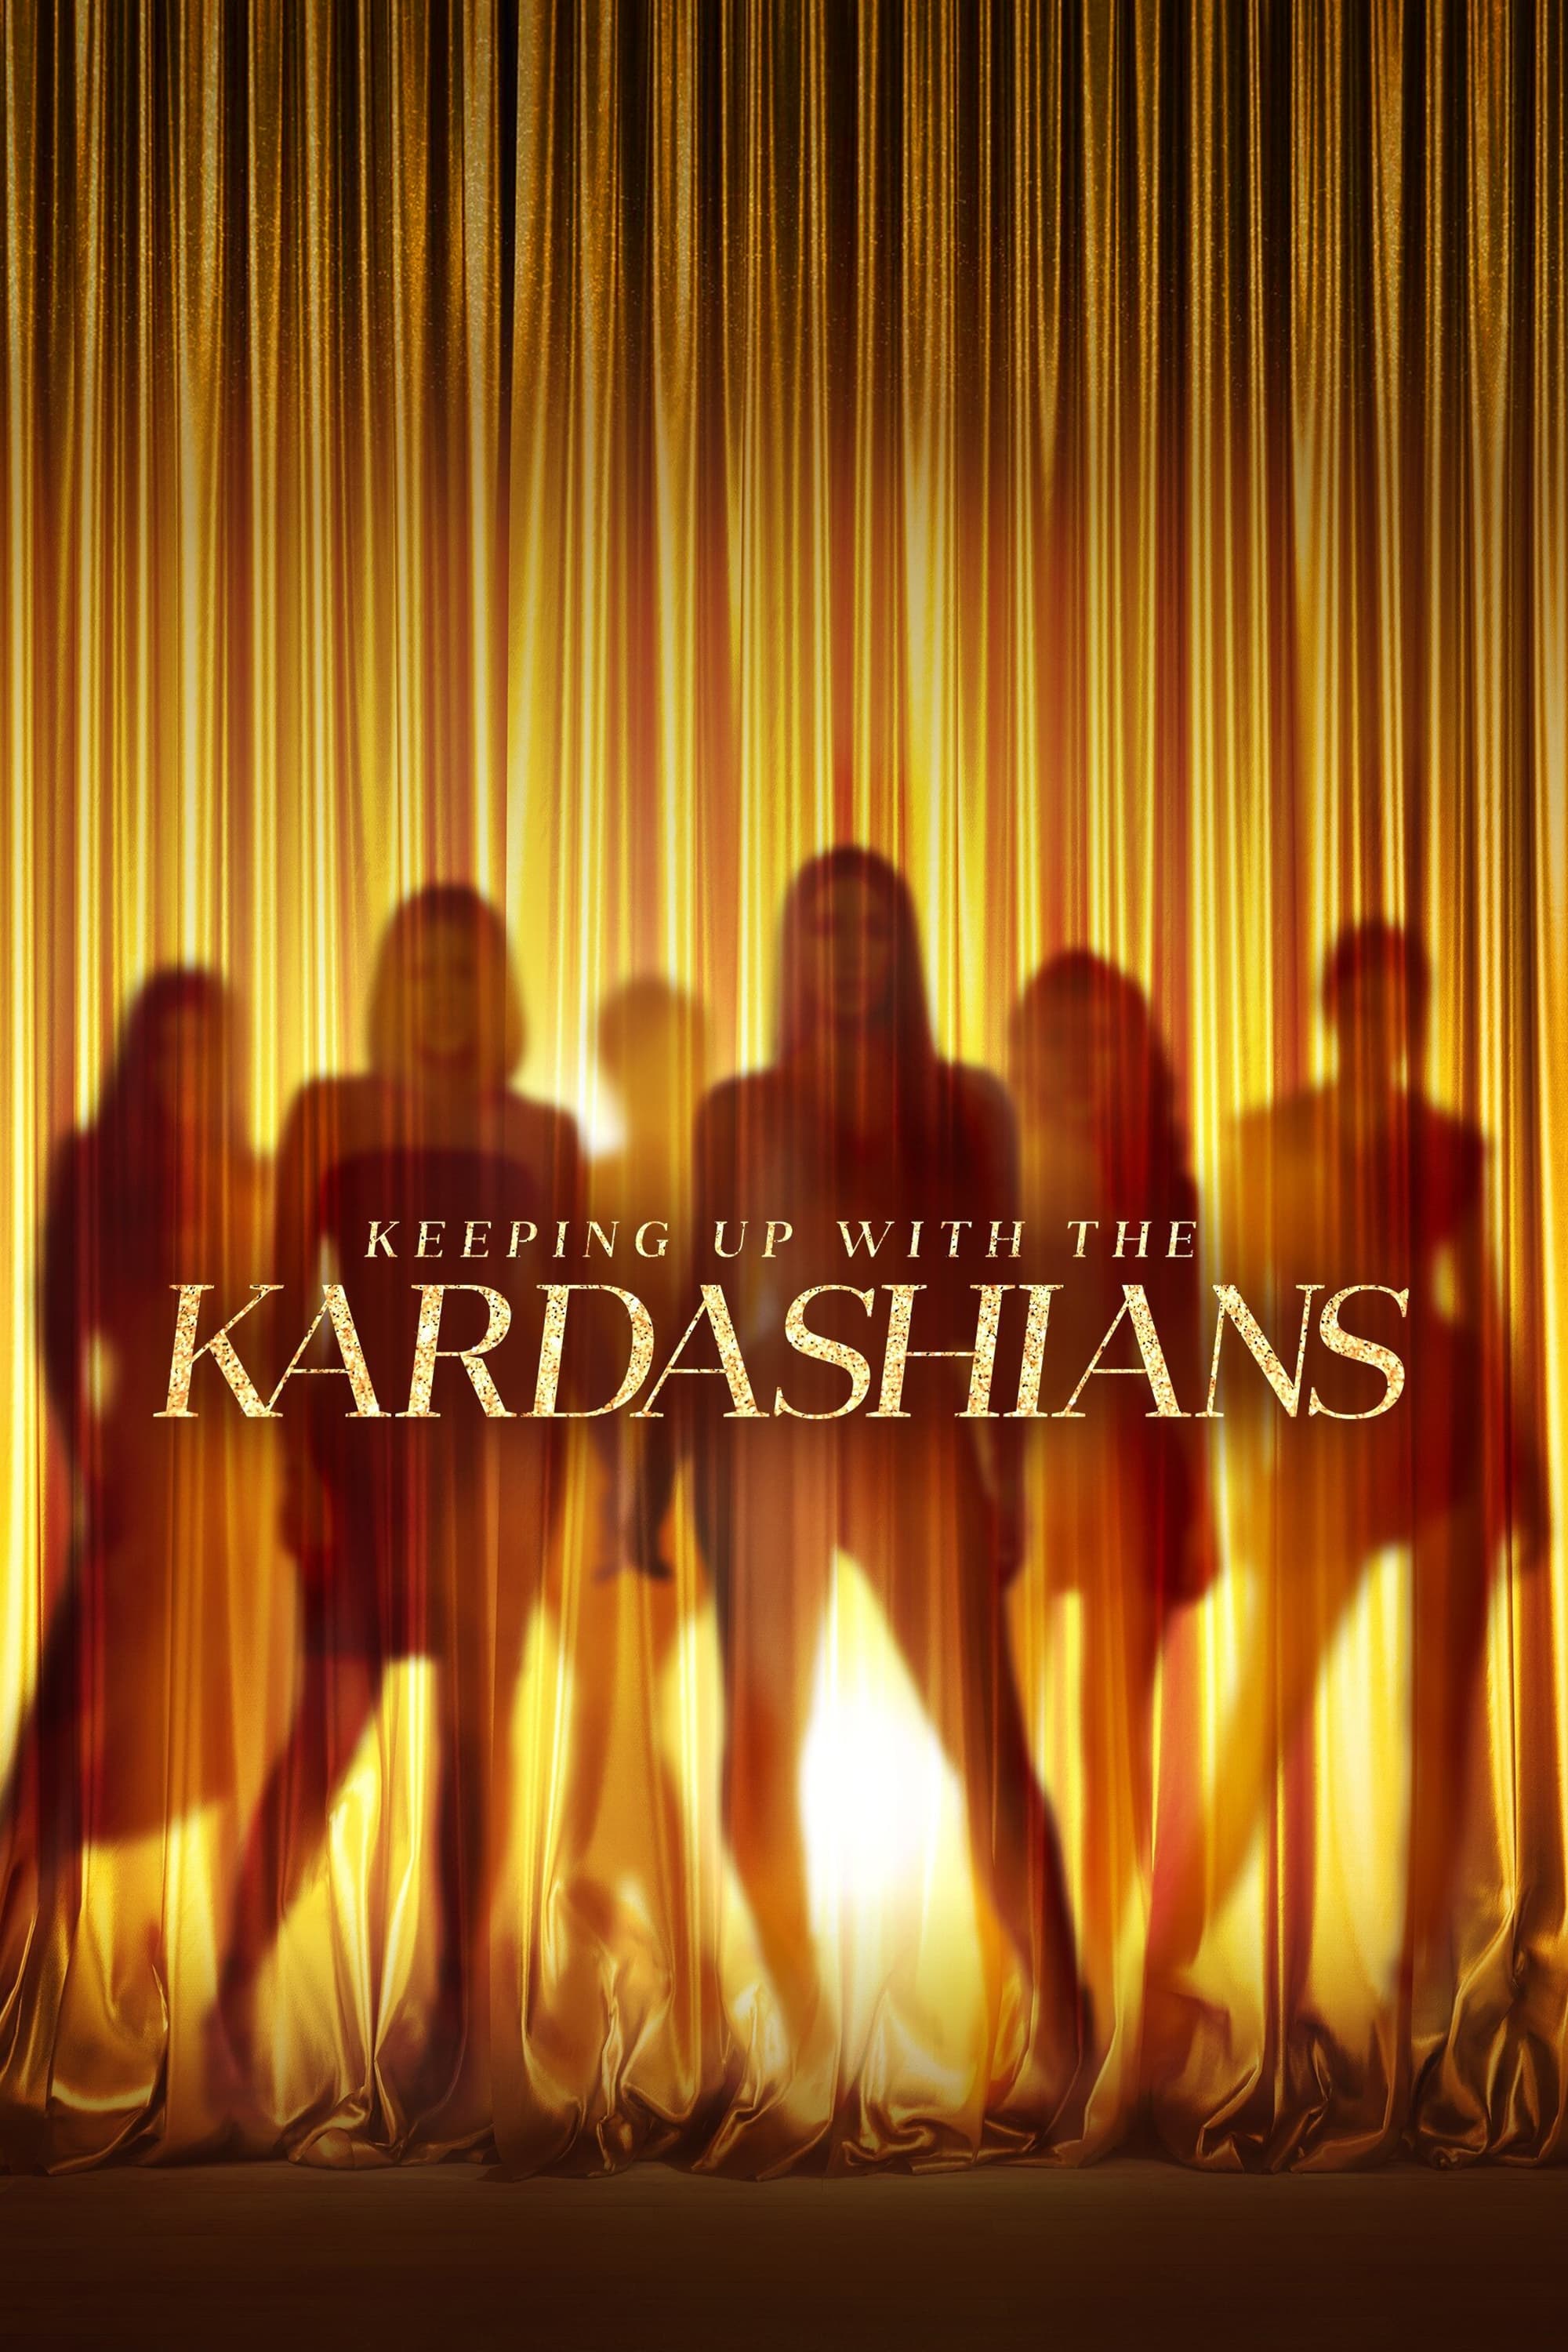 Las Kardashian (2007)